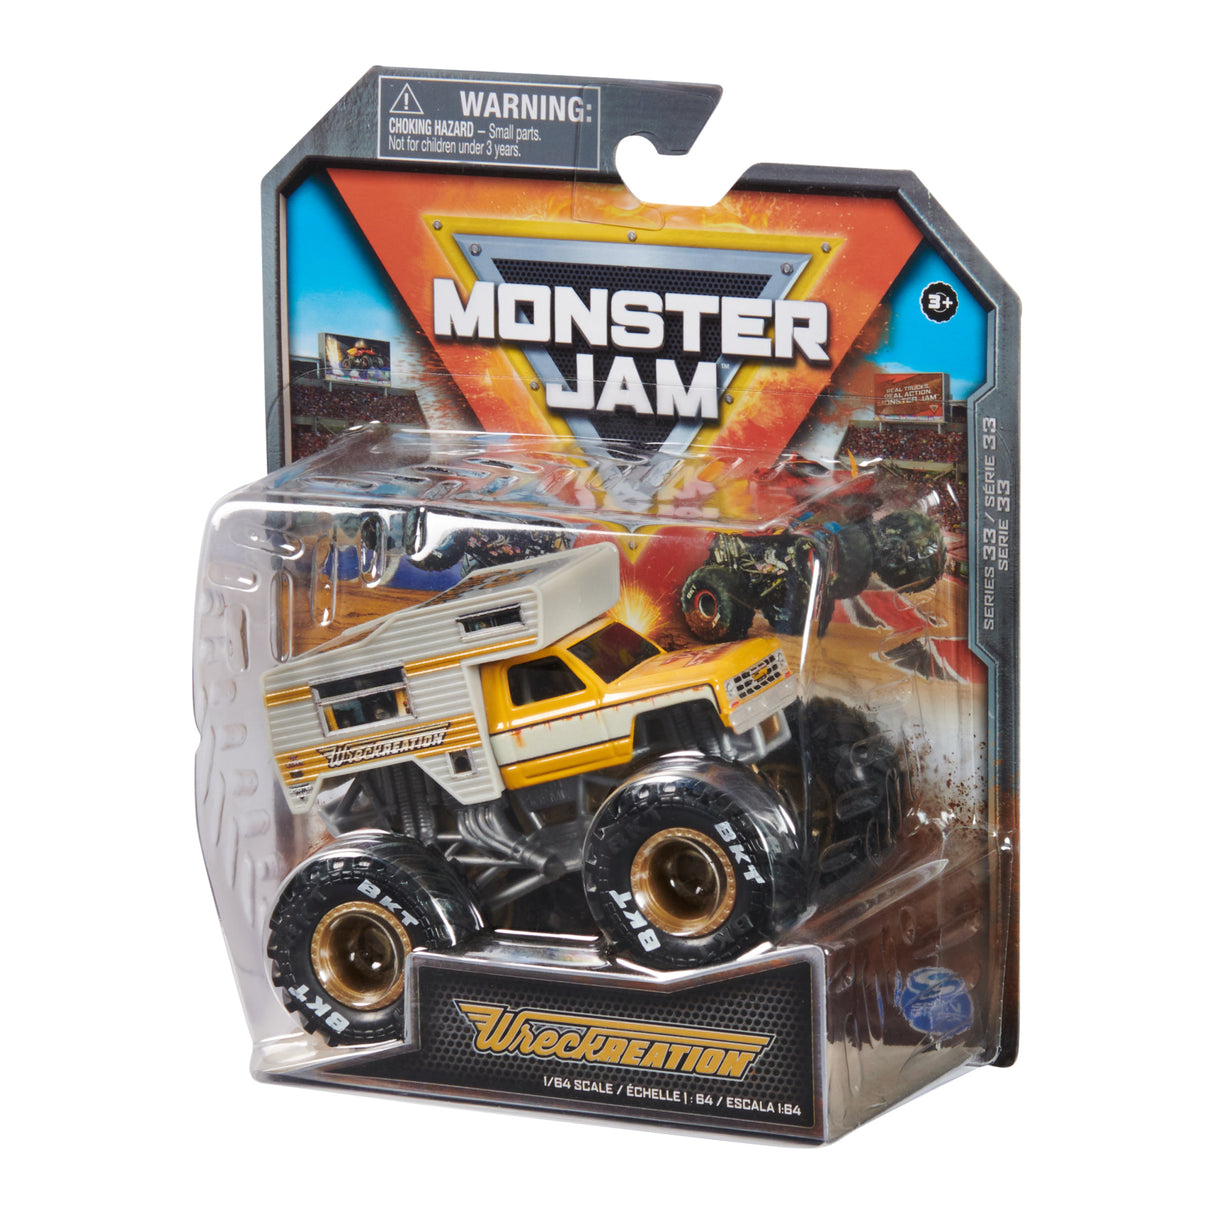 Monster Jam 1:64 Wreckreation Series 33 Die-cast Truck